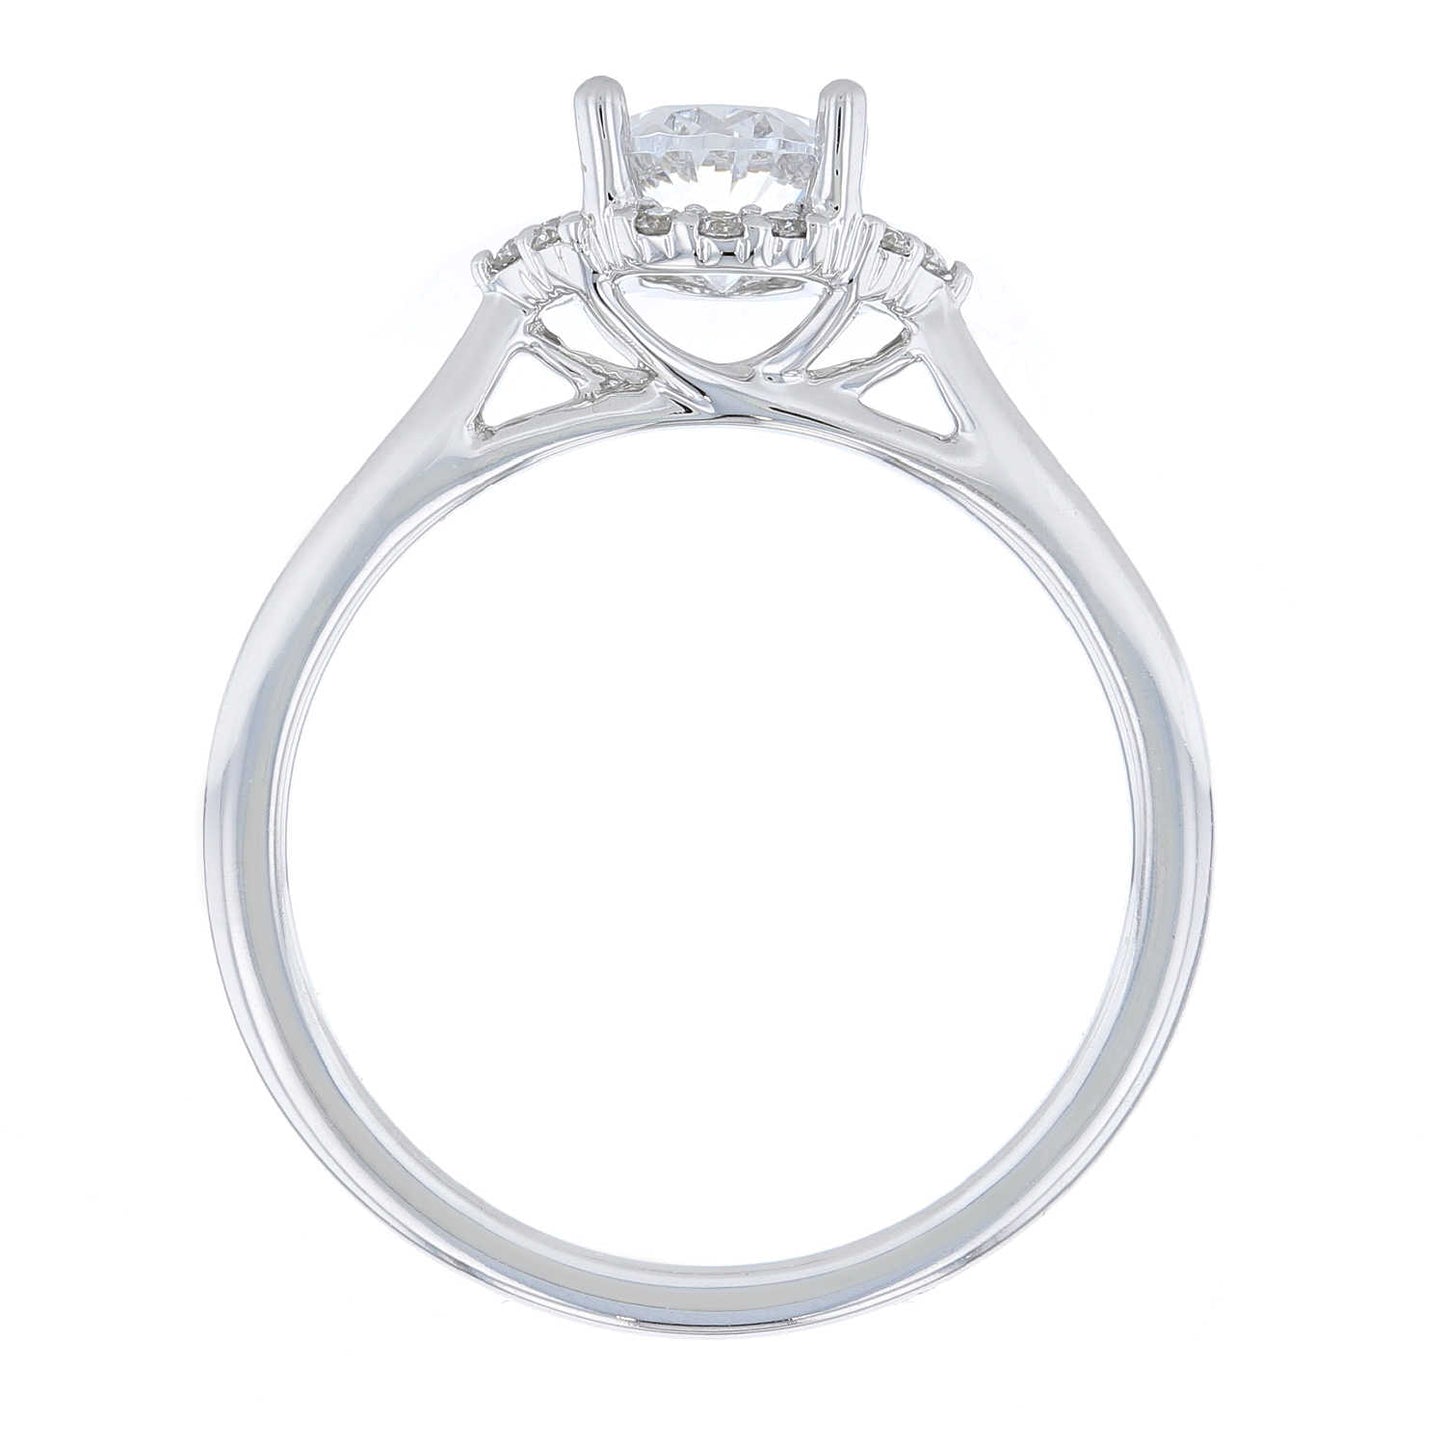 Graduated Halo Oval Diamond Engagement Ring